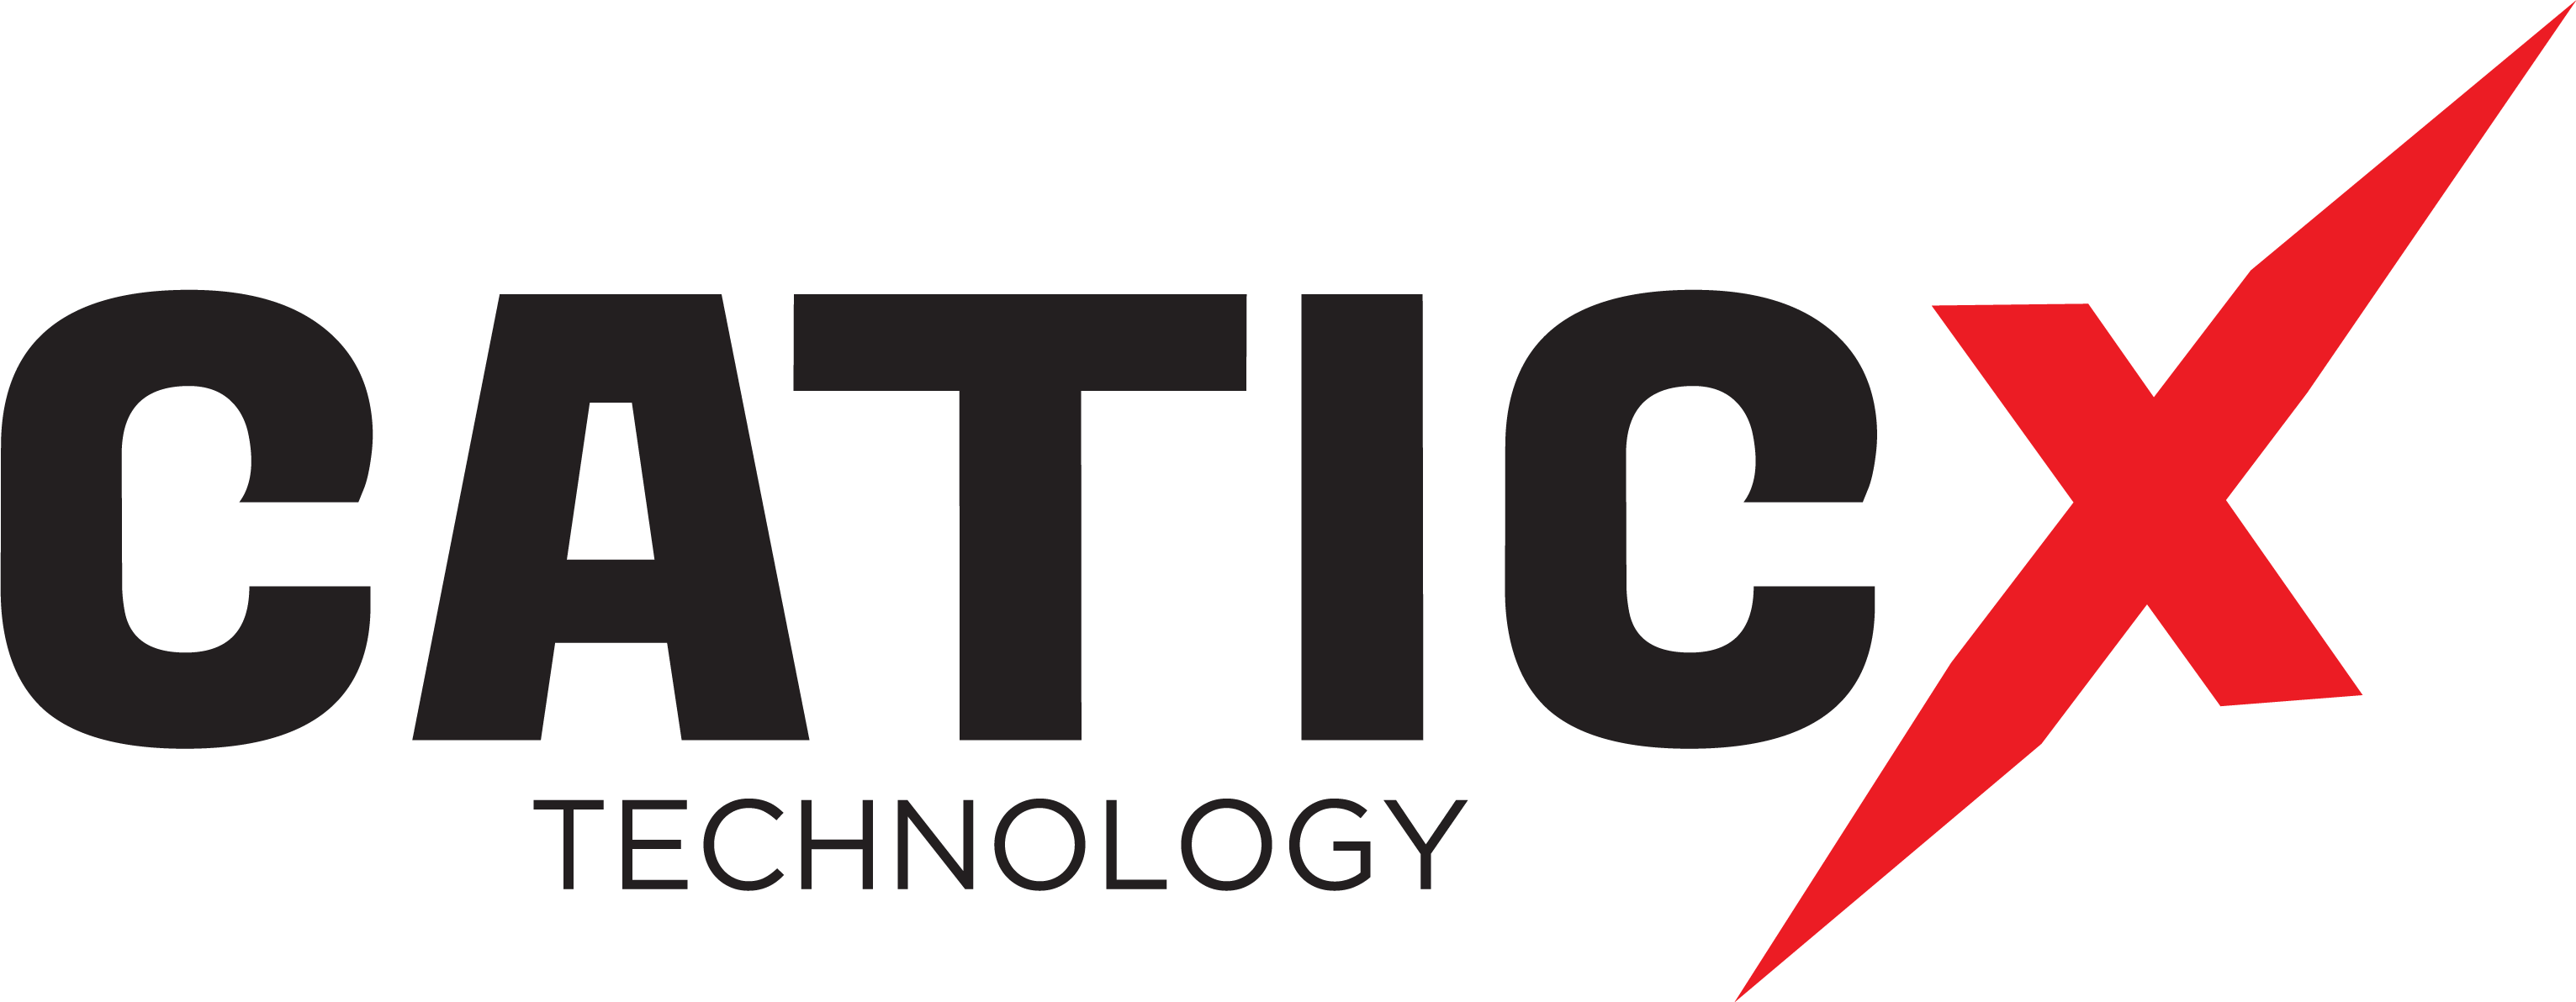 Caticx Technology